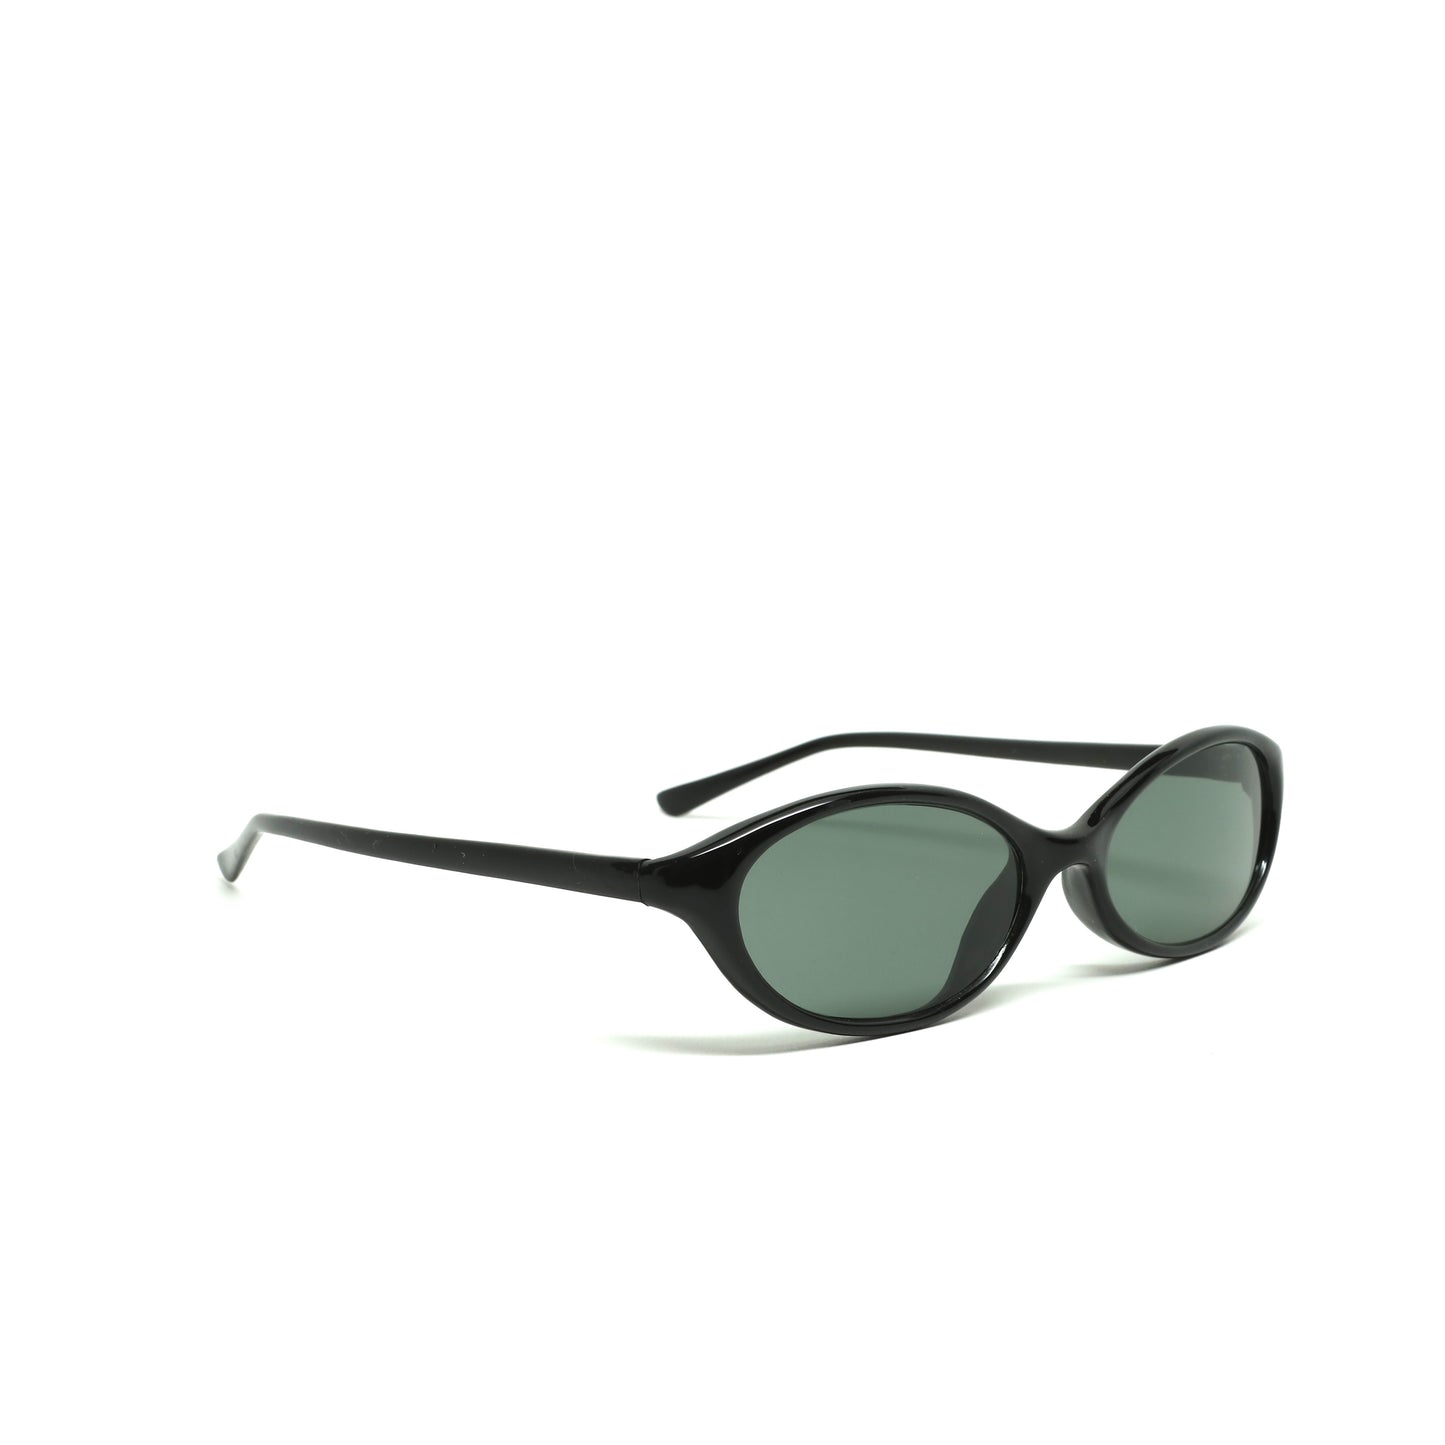 //Style 14// Vintage 90s Oval Frame Sunglasses - Black